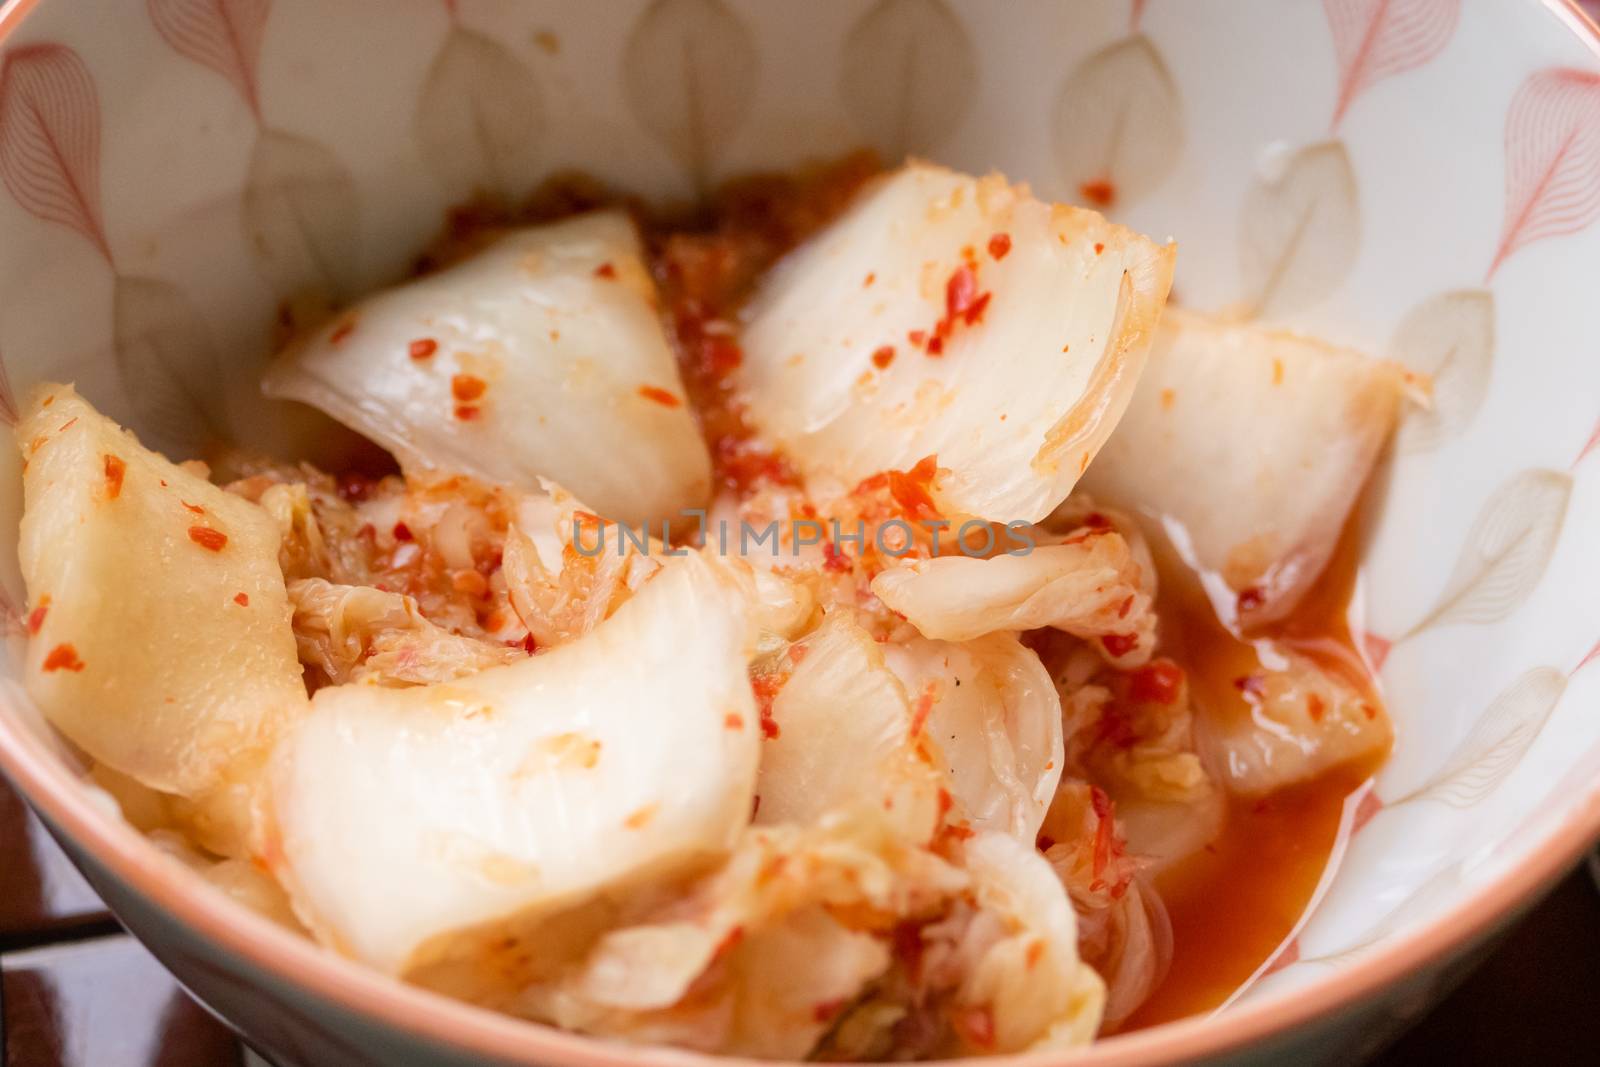 Korean spicy kimchi in a bowl